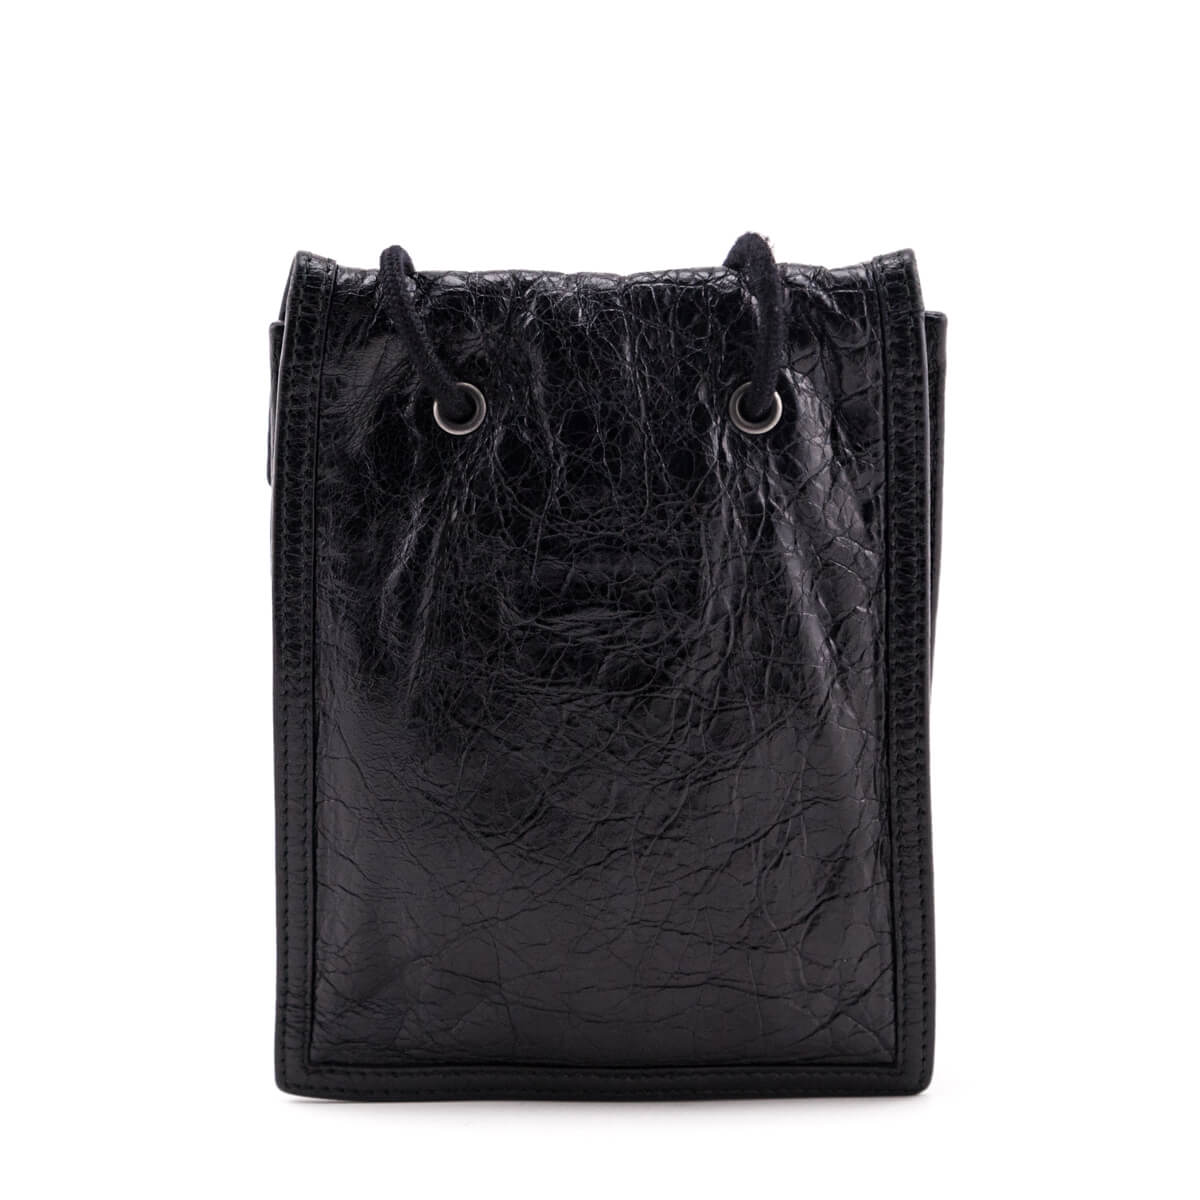 Balenciaga Black Agneau Explorer Crossbody Pouch - Love that Bag etc - Preowned Authentic Designer Handbags & Preloved Fashions